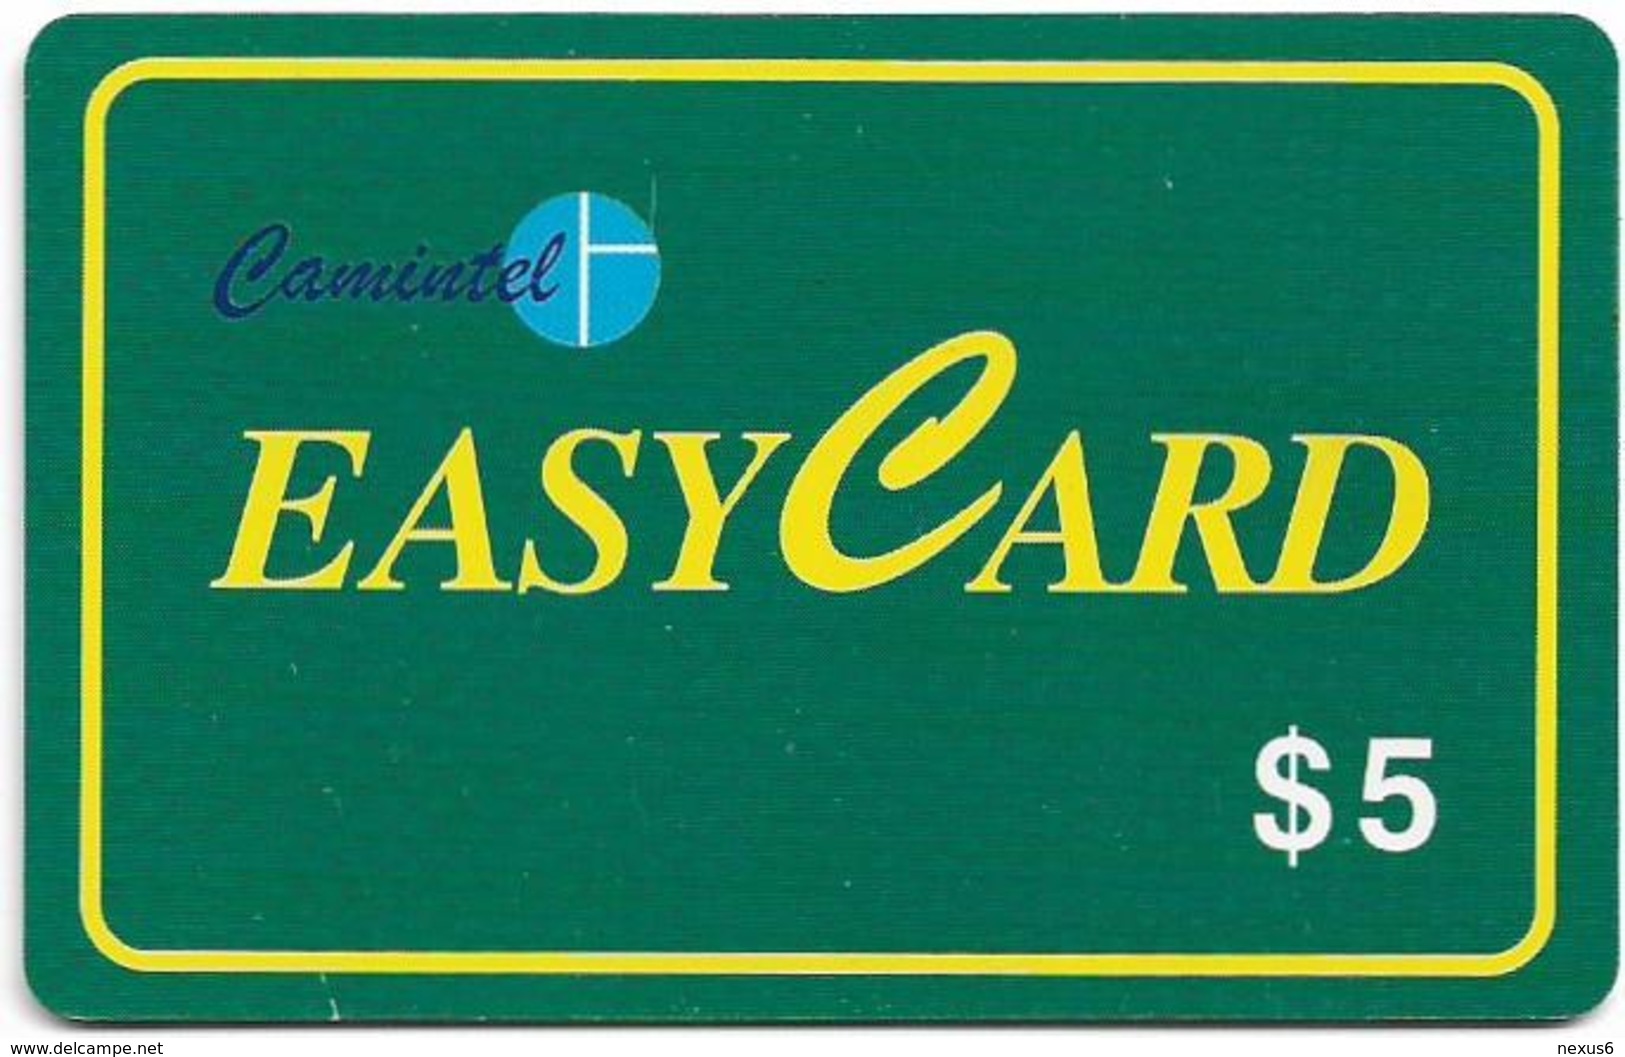 Cambodia - Camitel - Easycard Green 5$, (No Instructions Below Arrow), Used - Cambodge